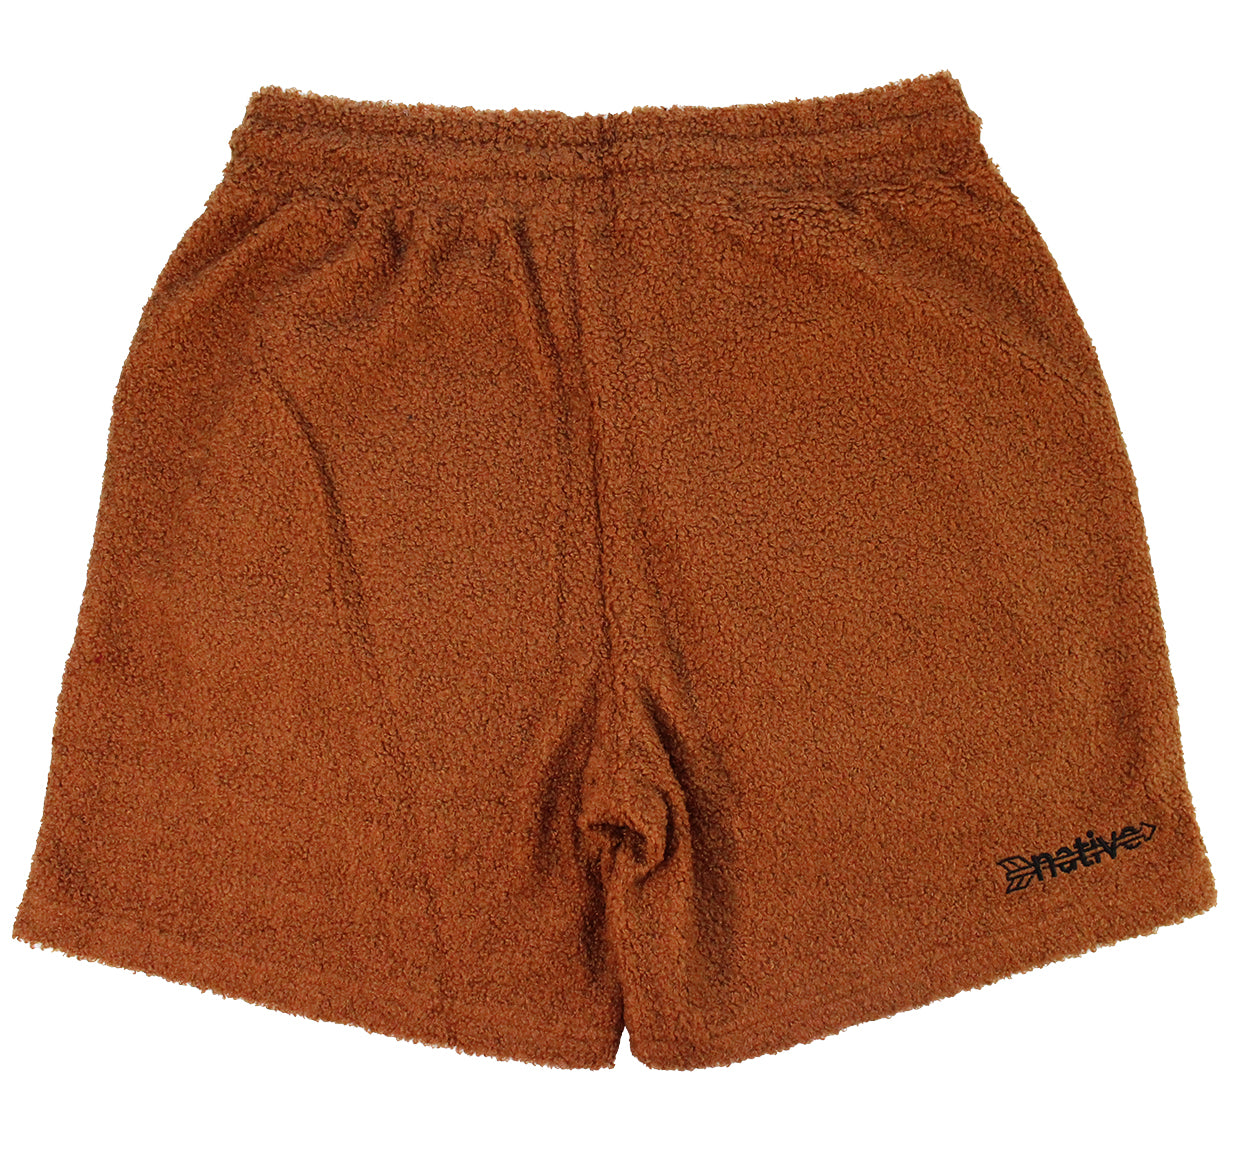 sherpa shorts in chestnut